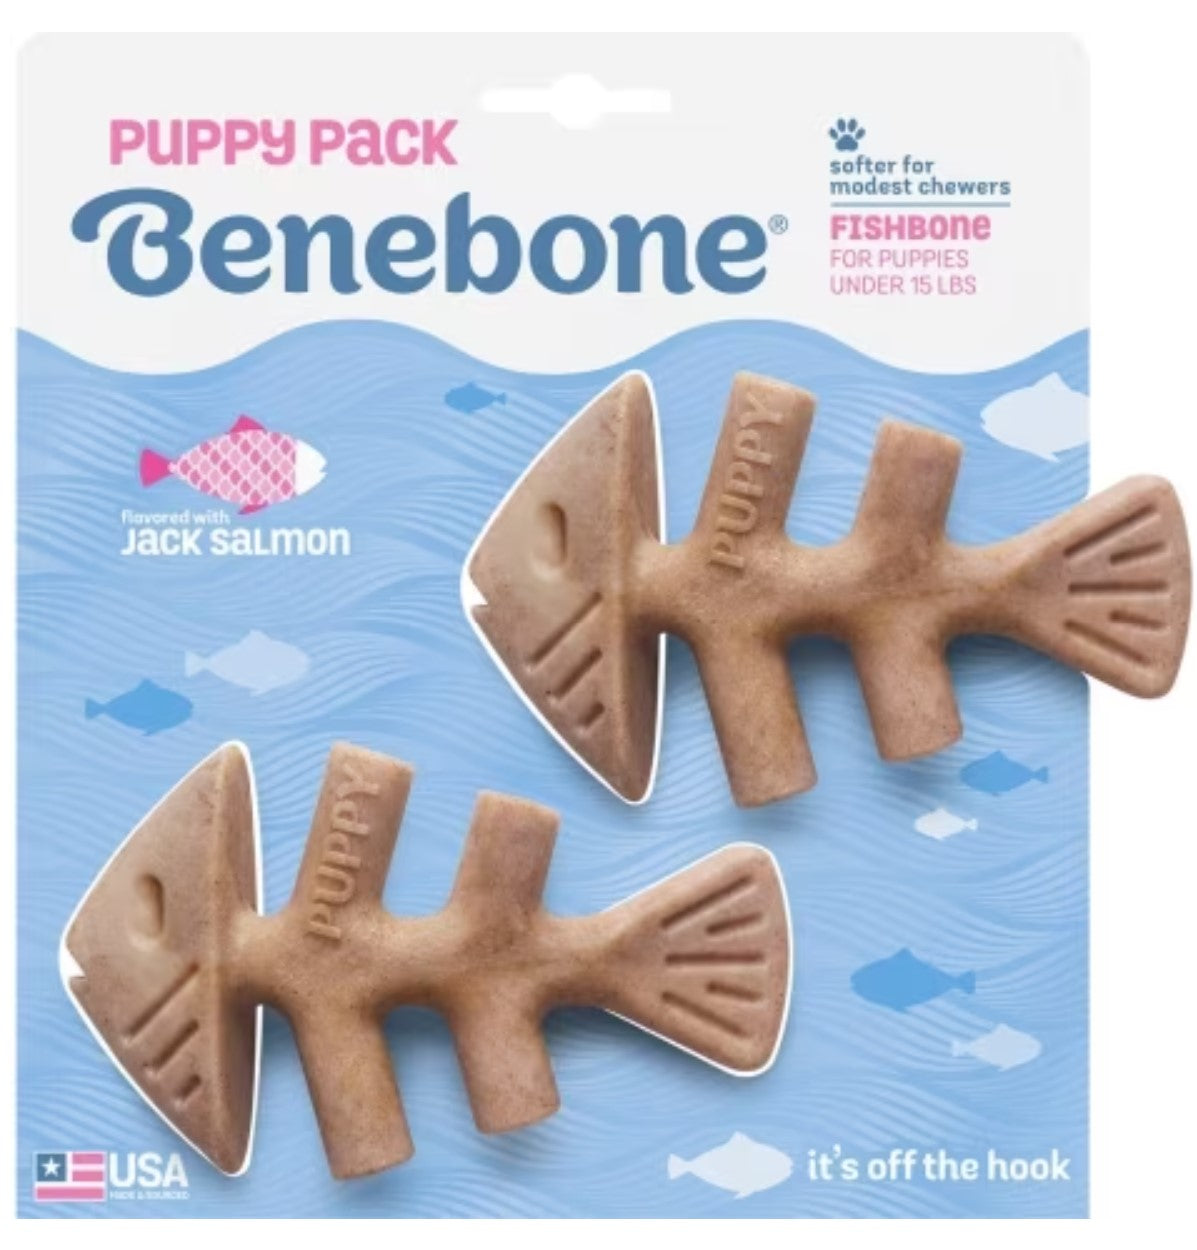 Benebone Fishbone *